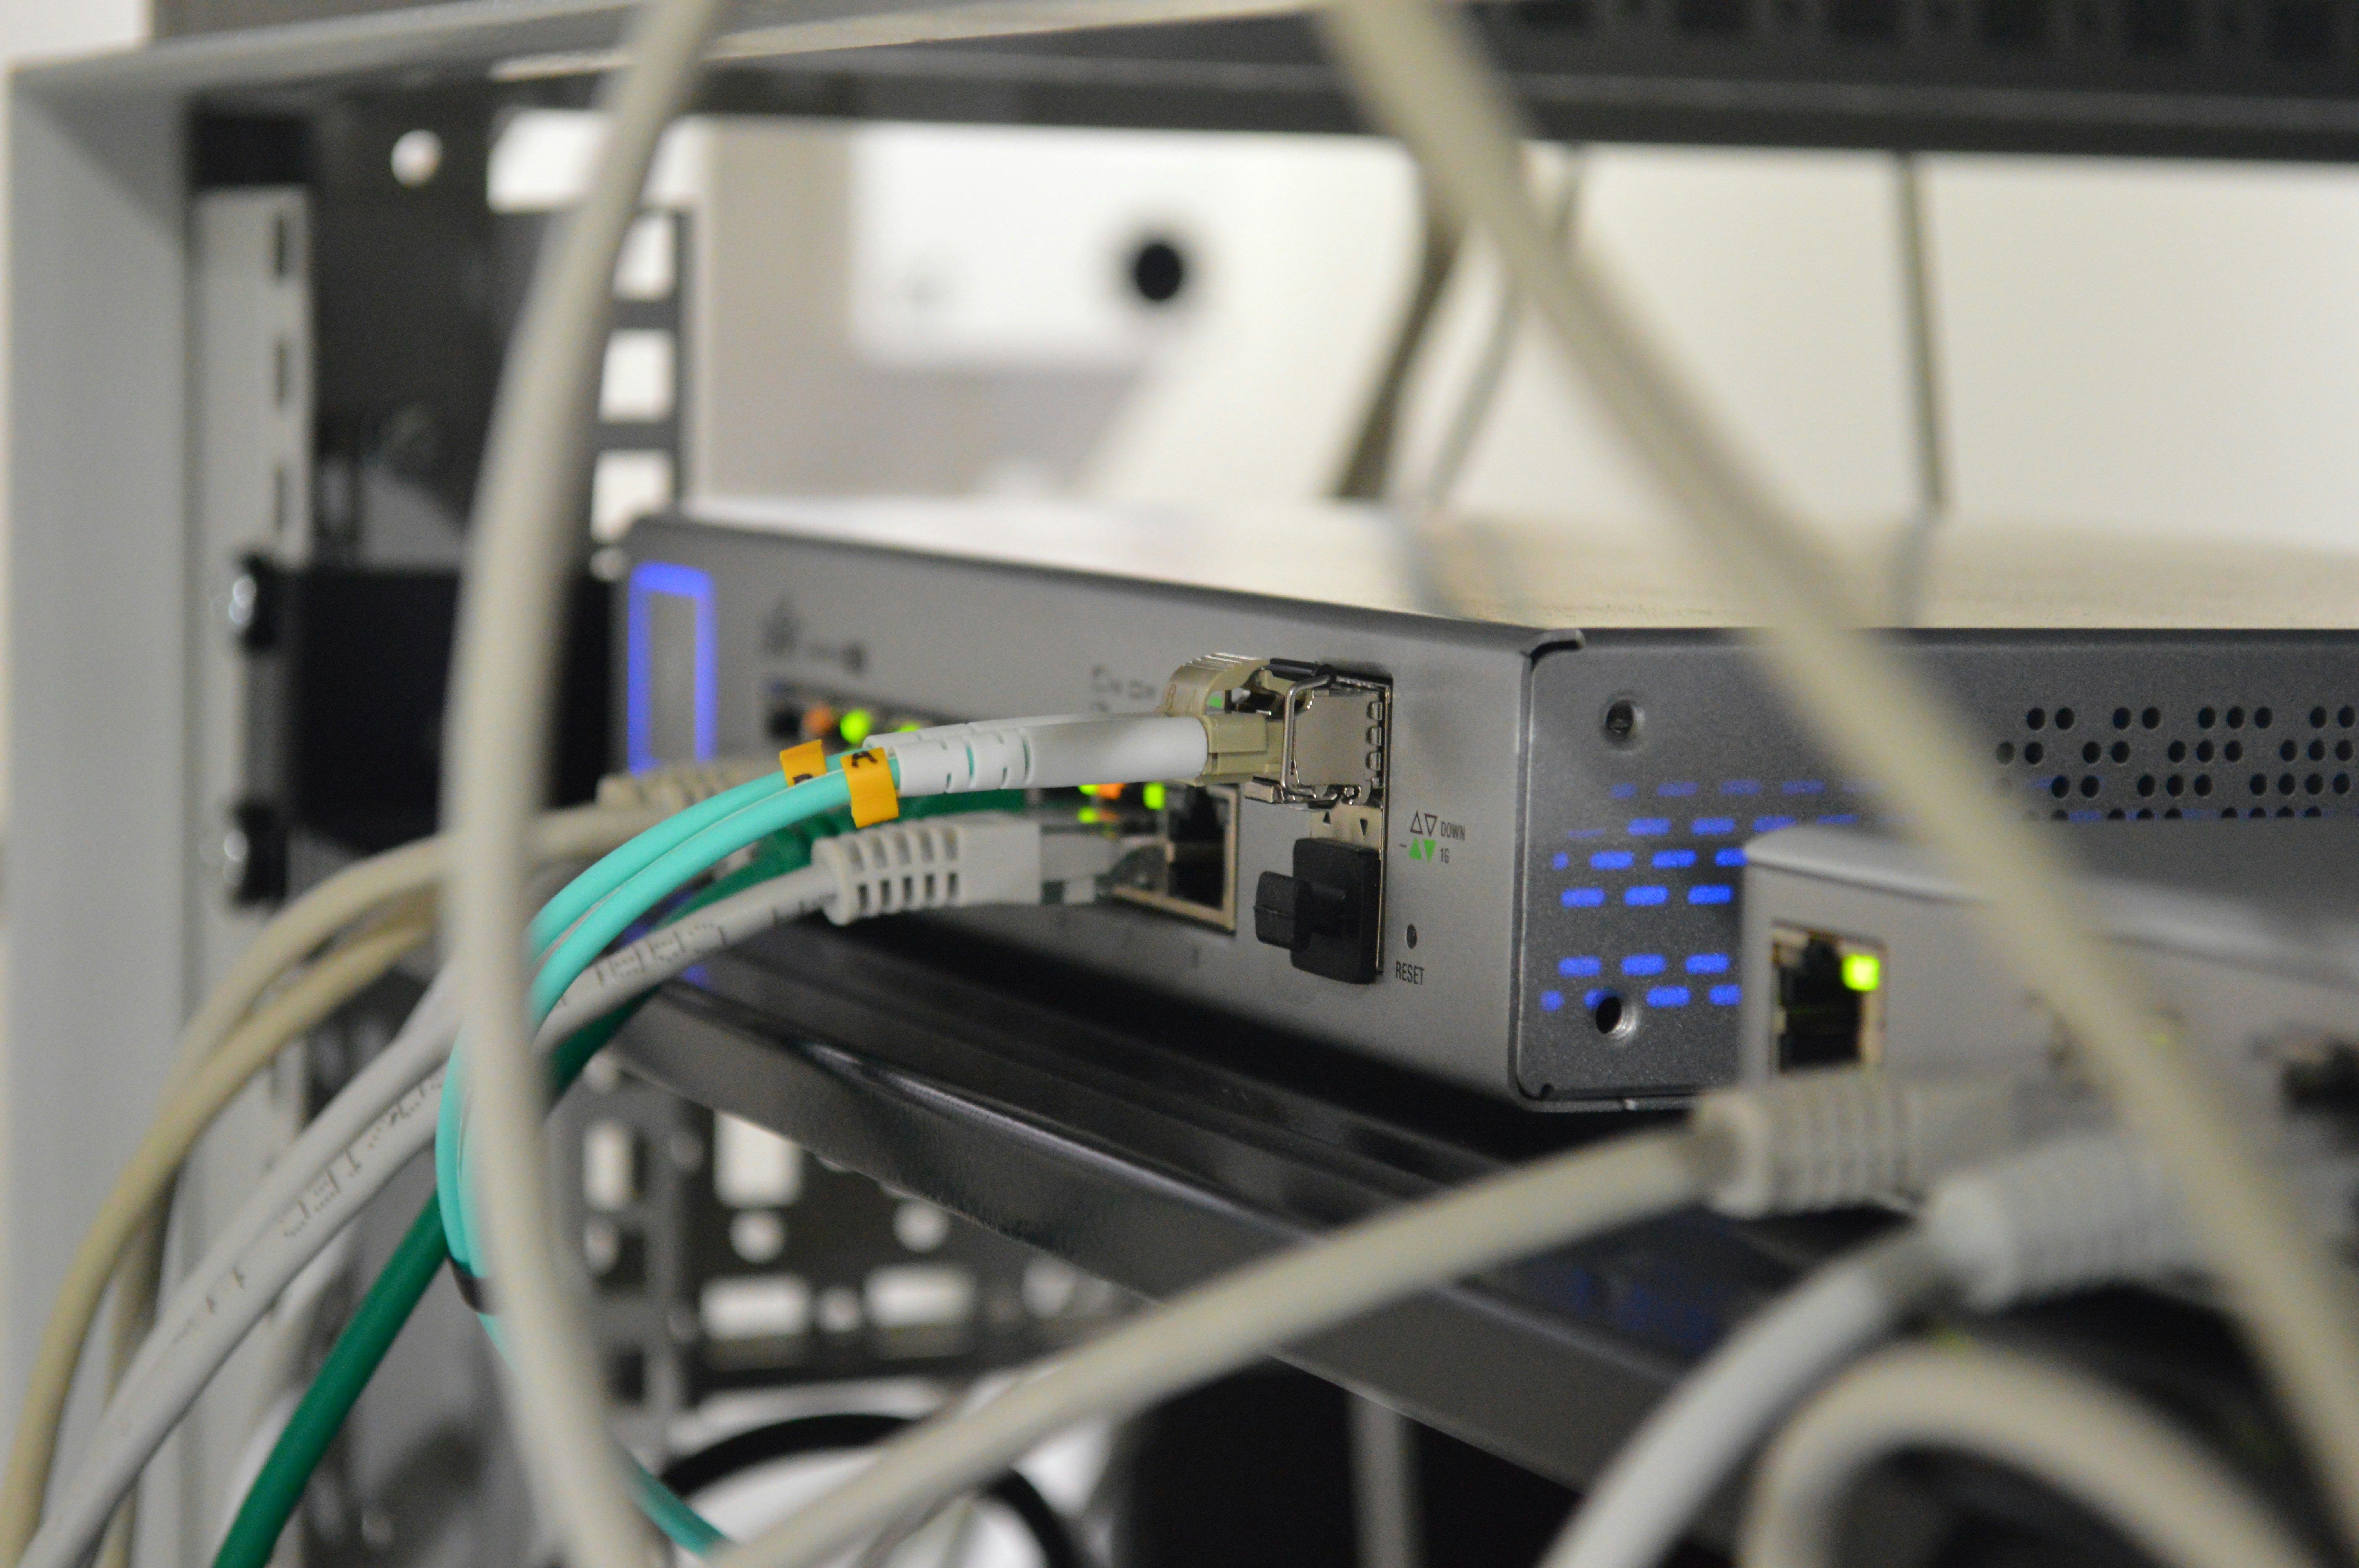 An image of an enterprise grade network router.